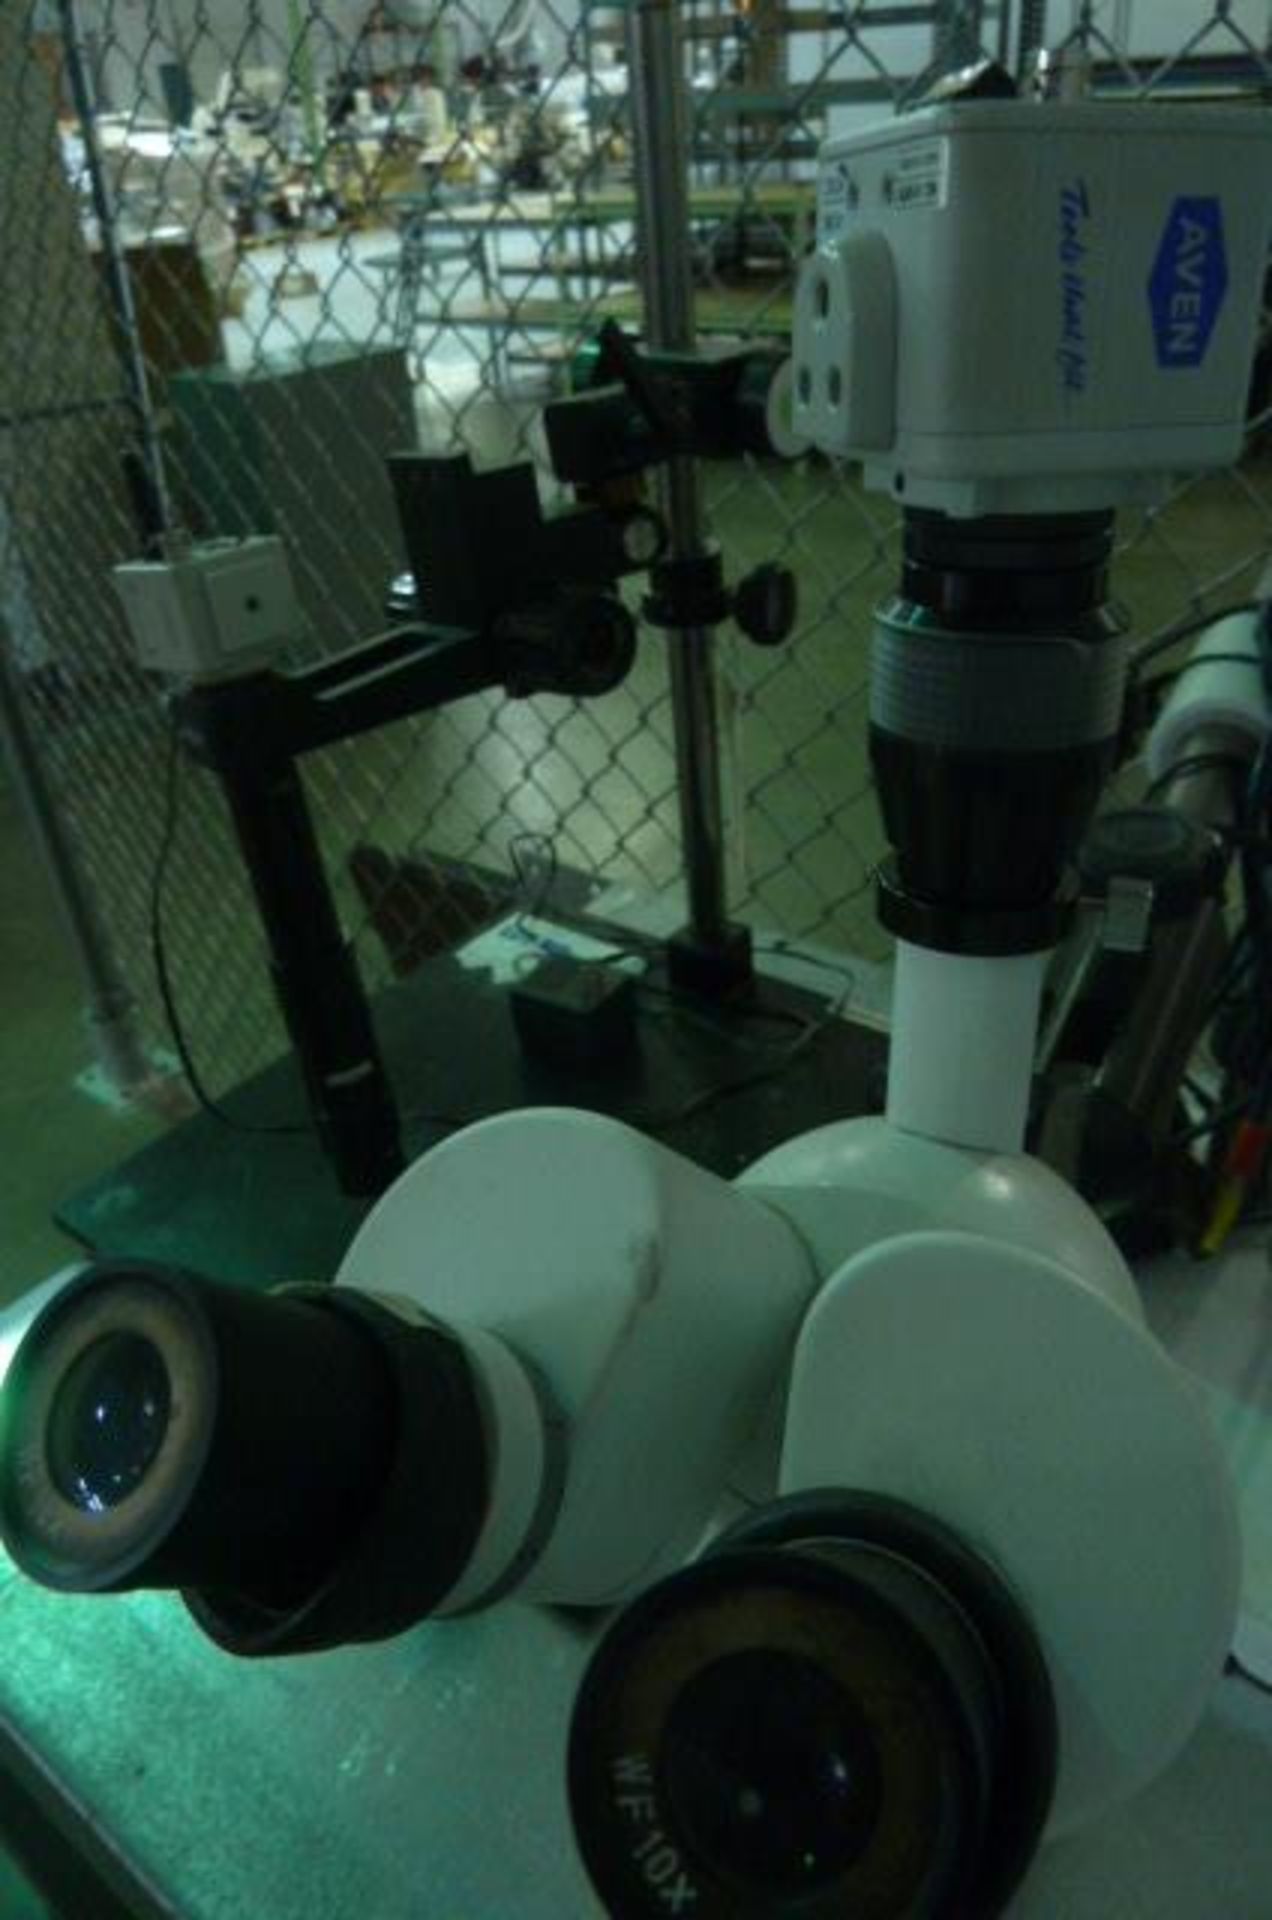 Microscopes by Scienscope, Aven, AmScope, SteroZoom SZ-4